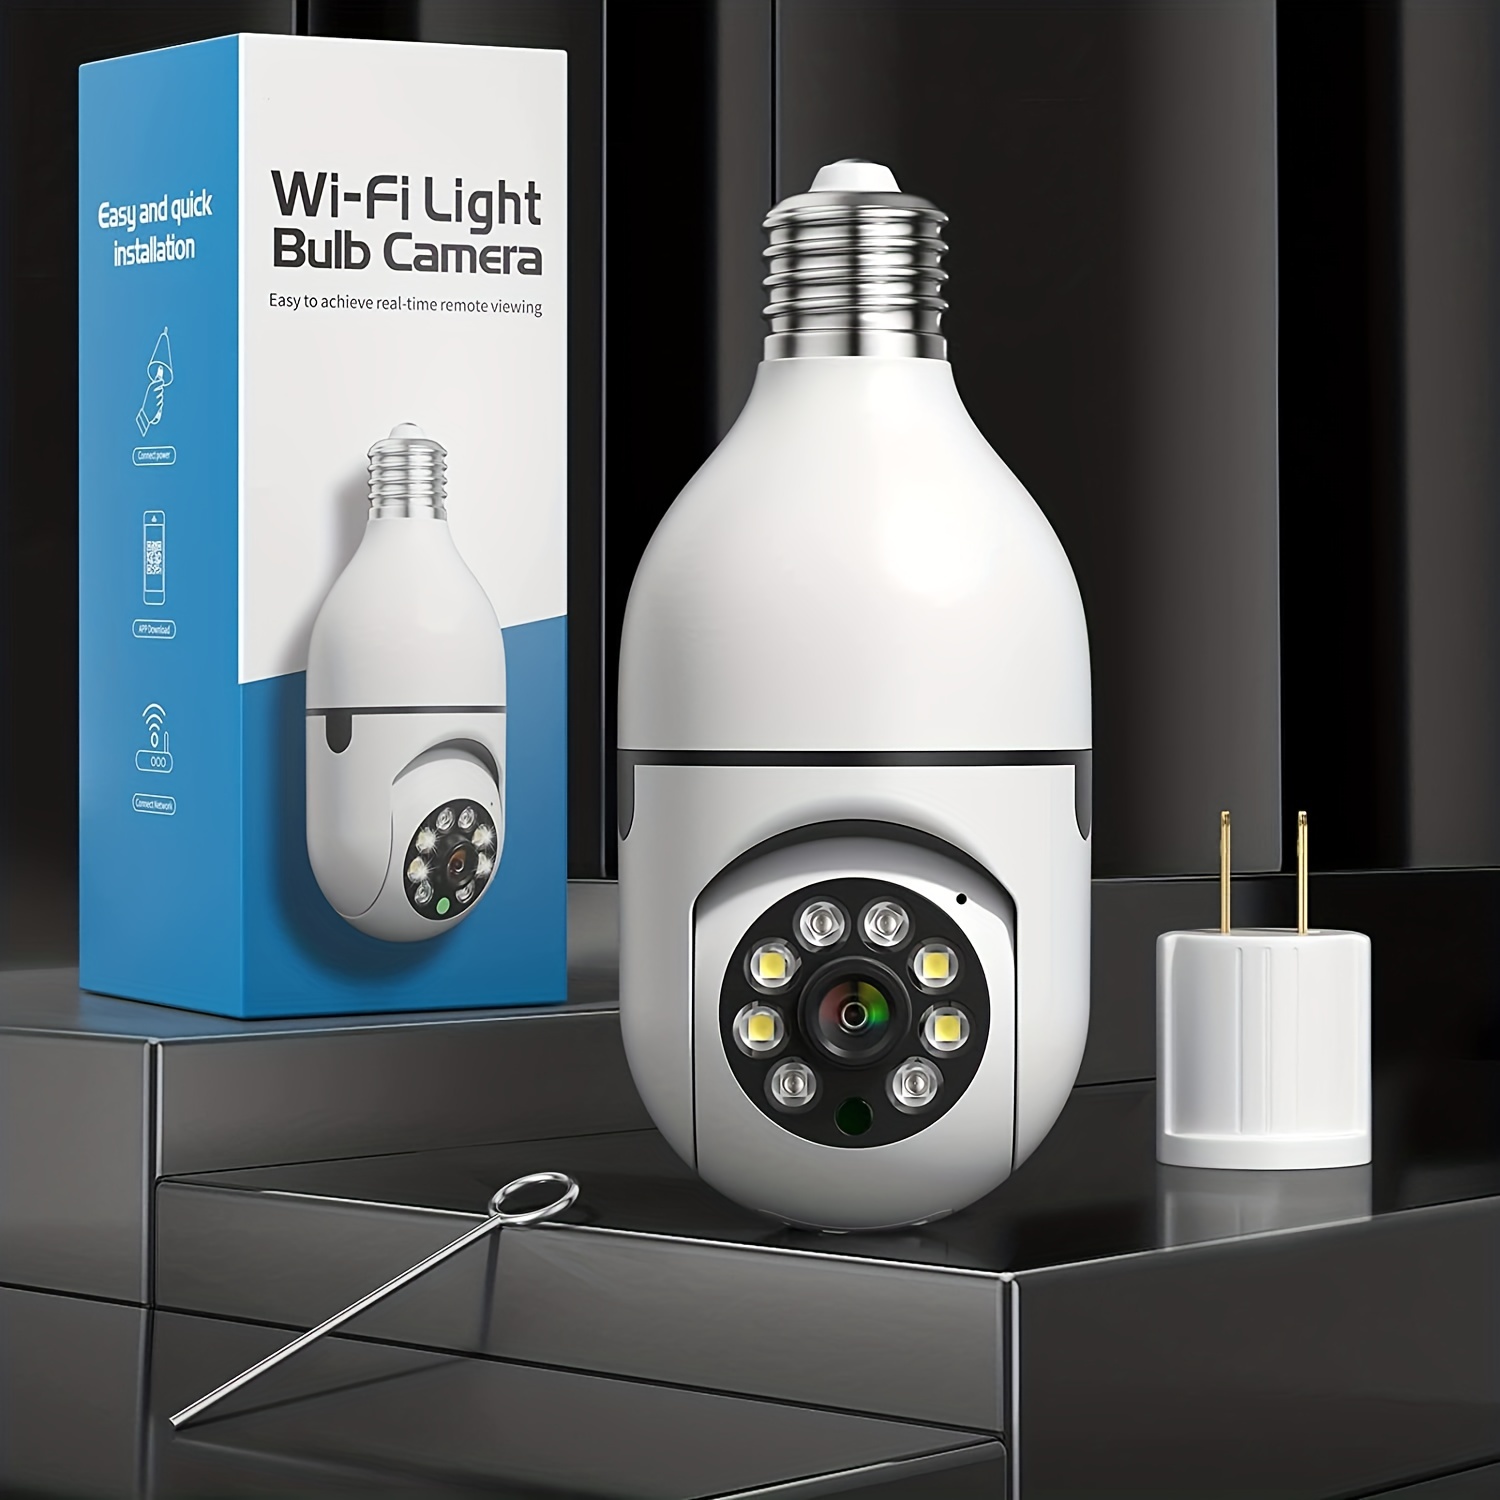 Tuya Panoramic Camera with E27 Wi-Fi 2.0MP Alexa Google Bulb